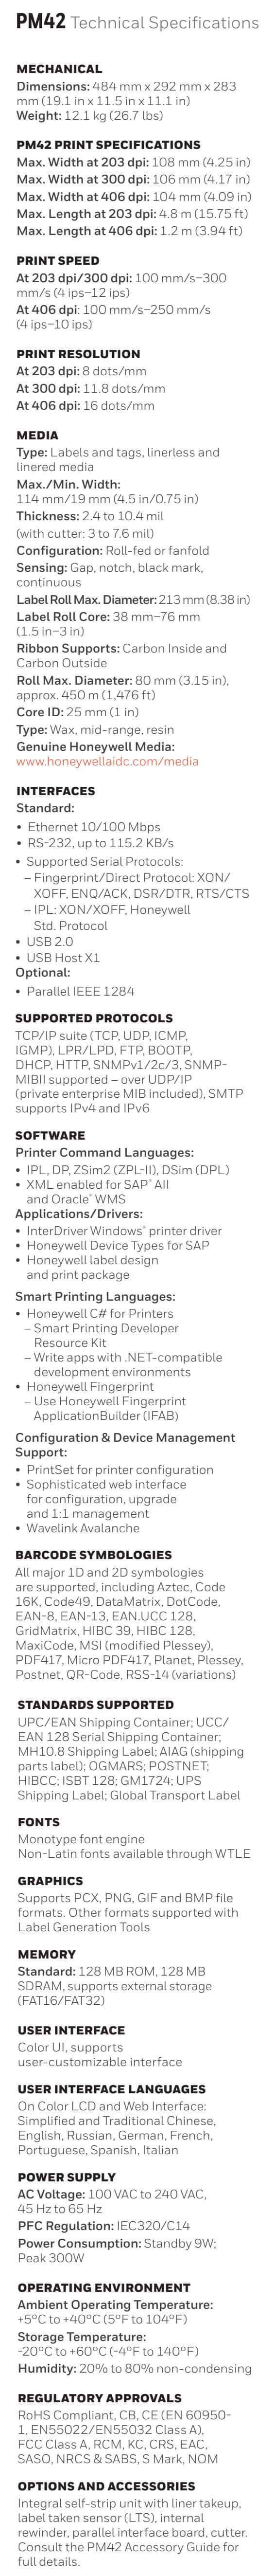 Honeywell PM42 Industrial Label Printer data sheet